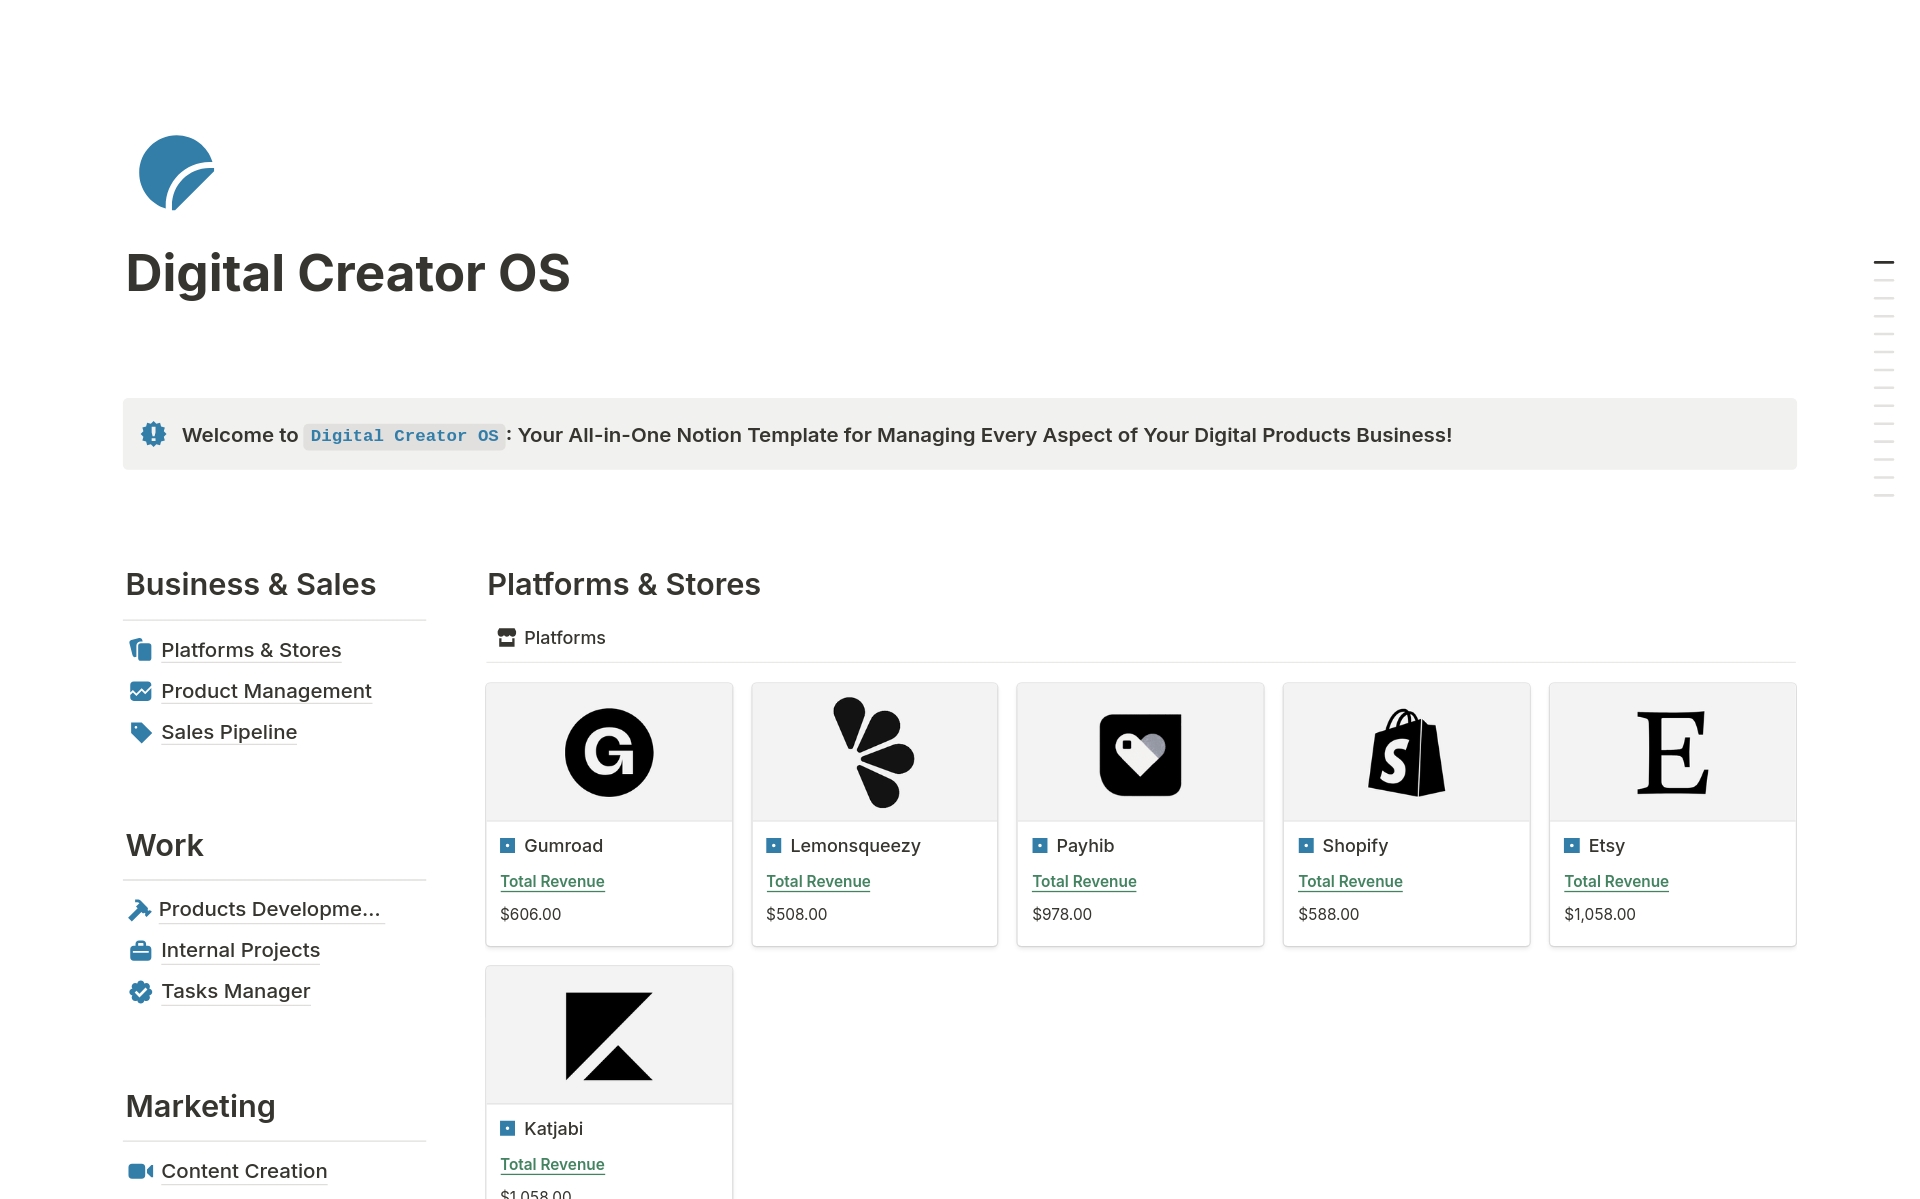 Vista previa de una plantilla para Digital Creator OS